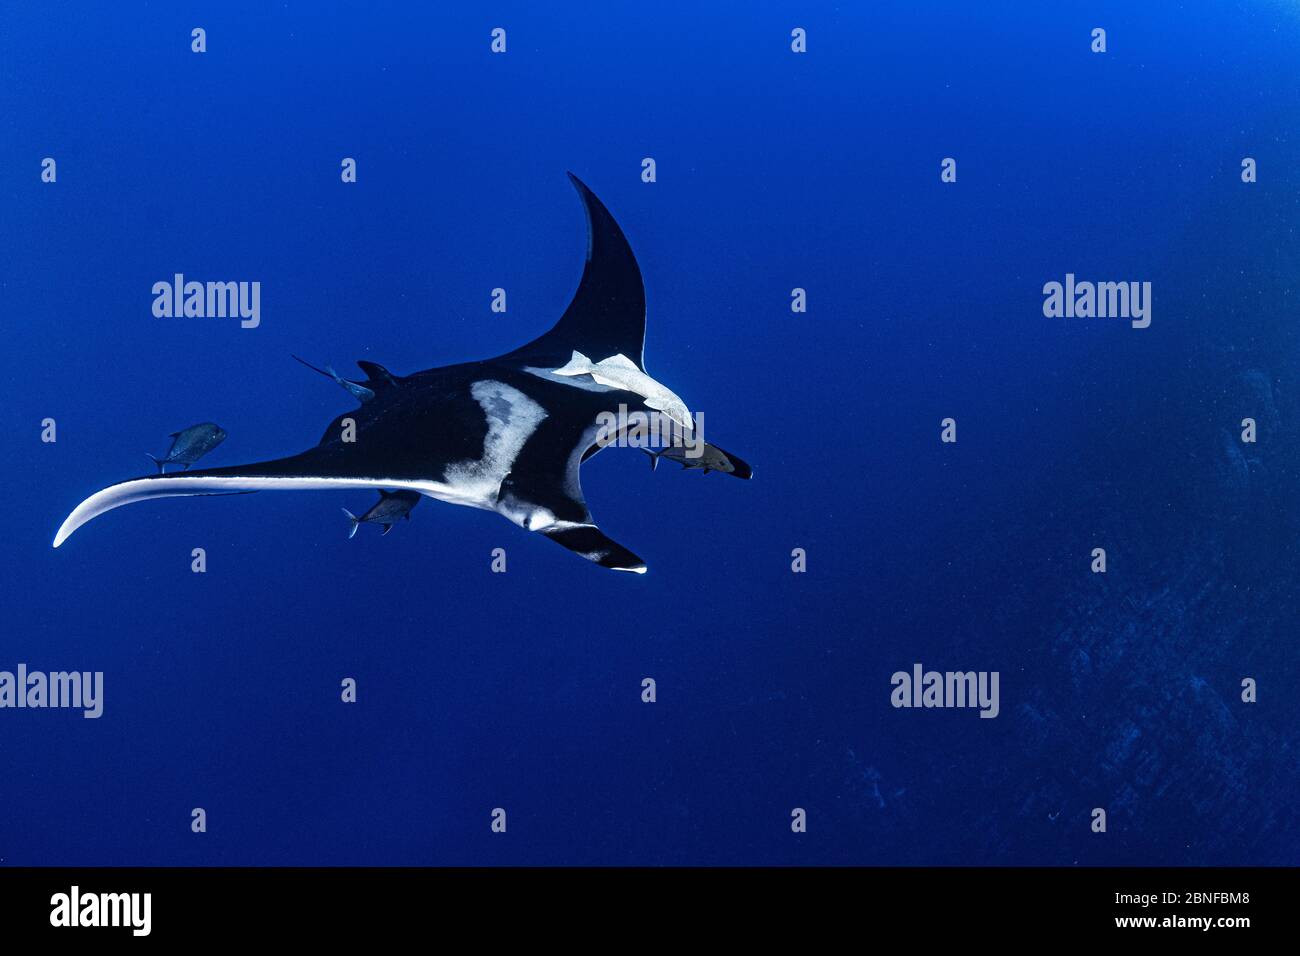 Manta ray géant en vol Banque D'Images